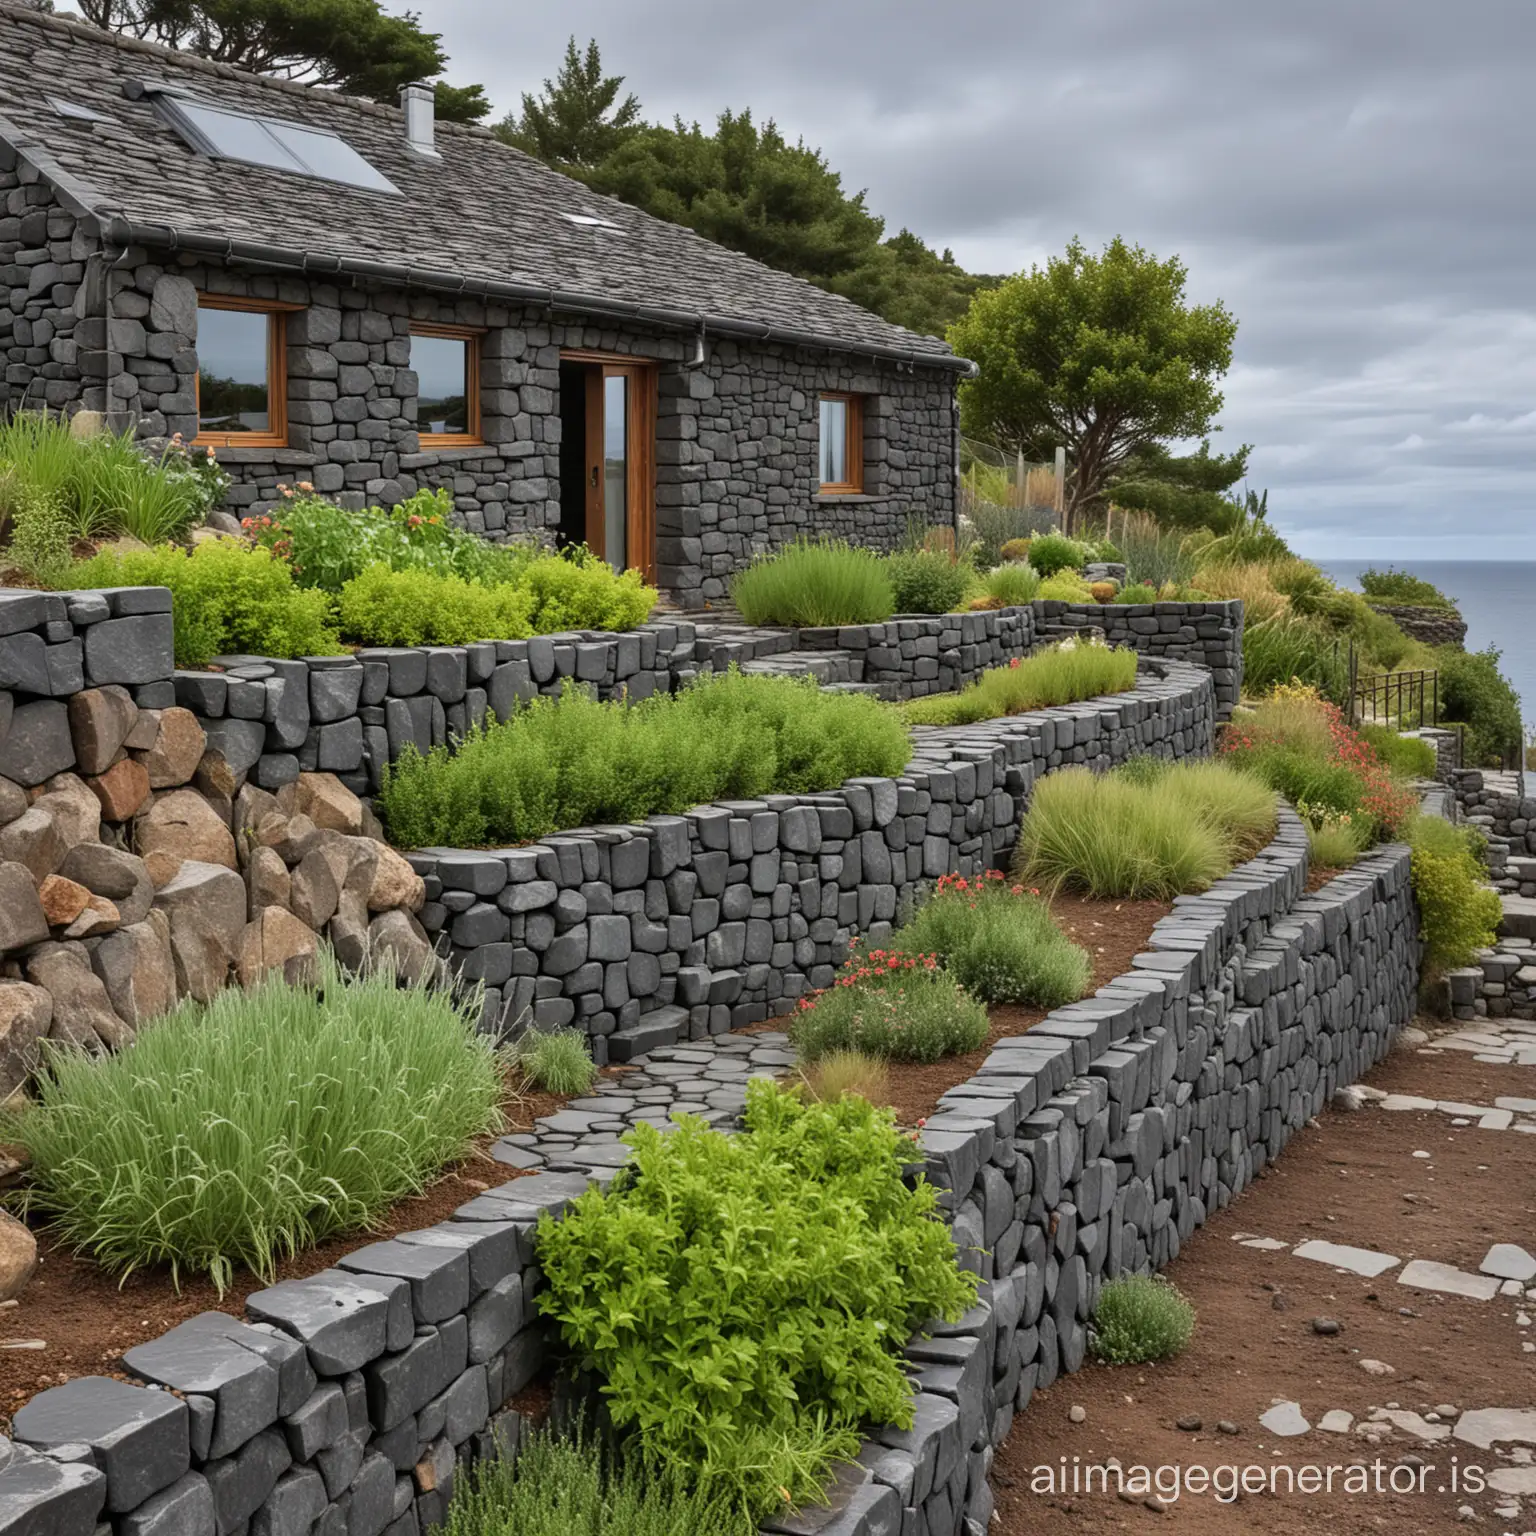 Basalt-Stone-Herb-Garden-and-Azorean-Sea-Cottage-in-High-Definition